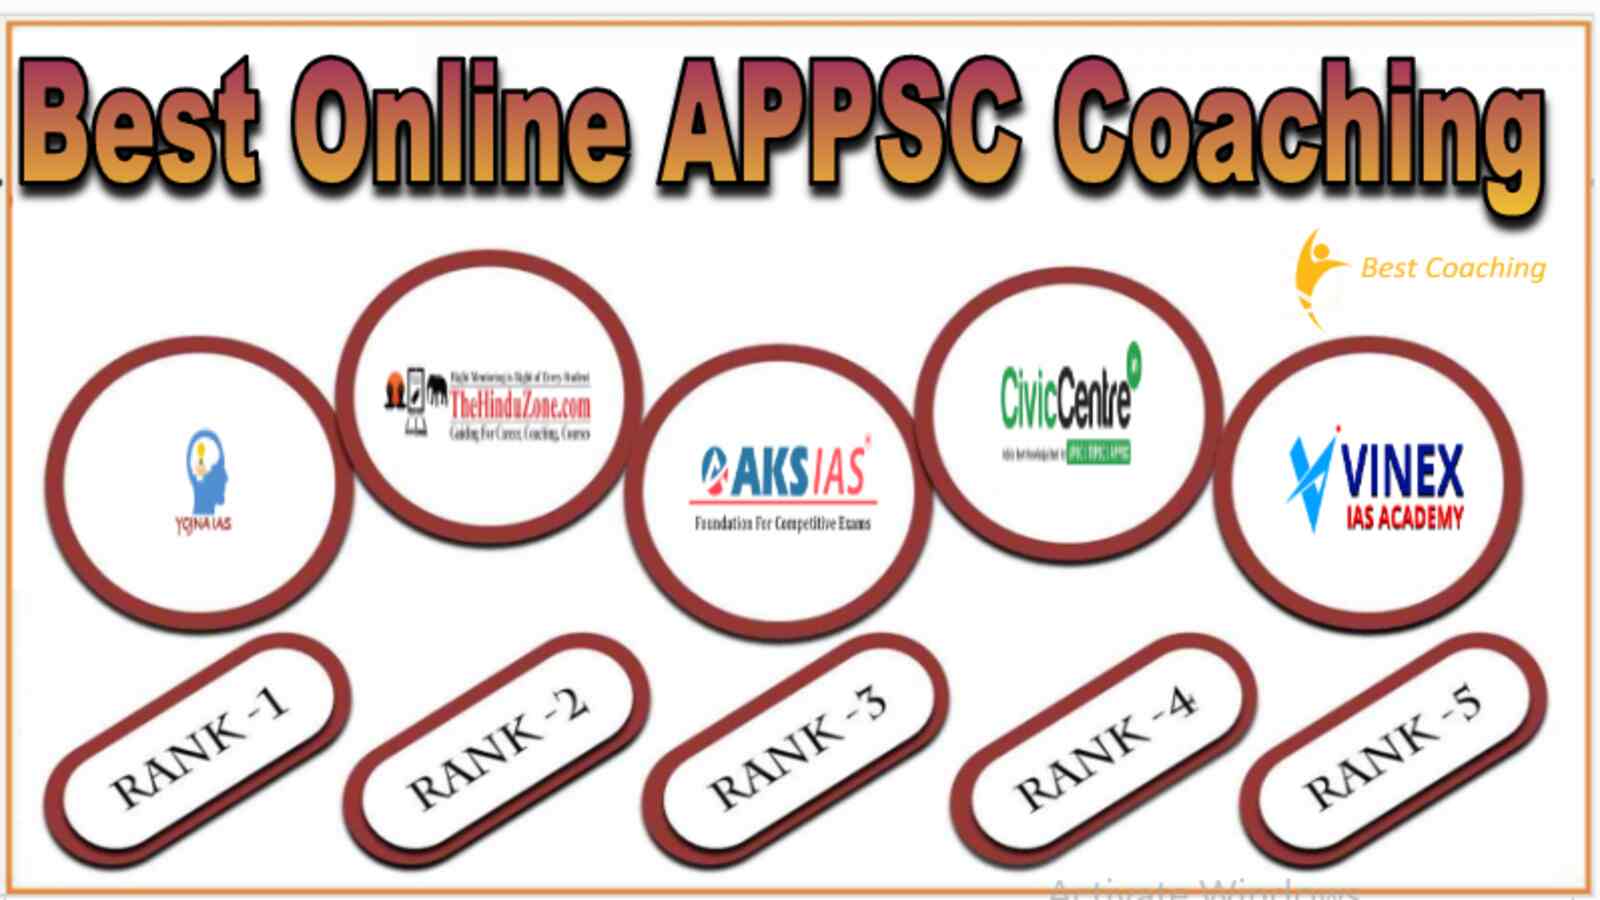 Best Online APPSC Coaching